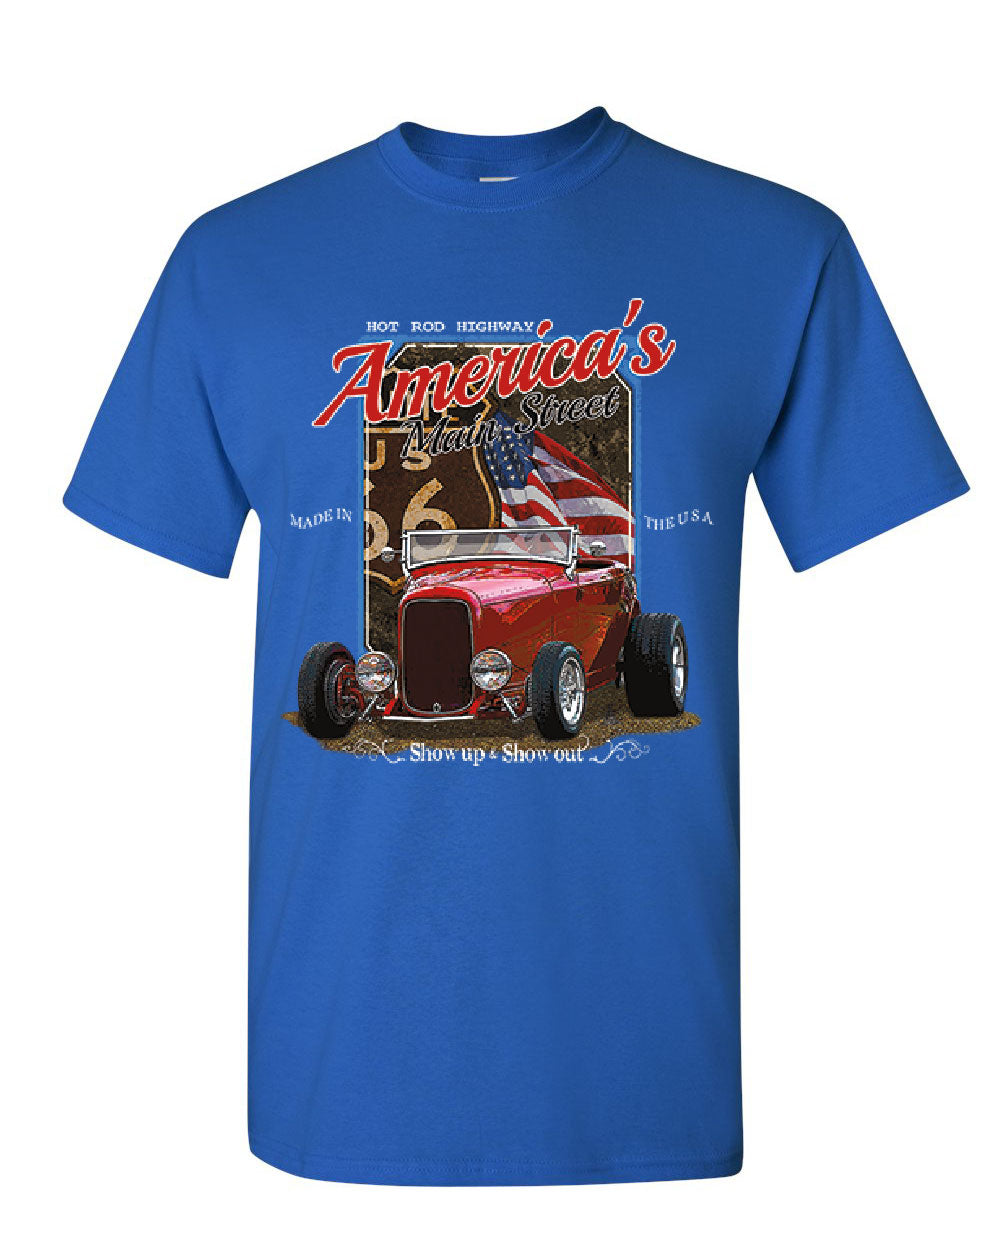 Hot Rod Highway Route 66 T-Shirt America's Main Street Vintage Mens Tee ...